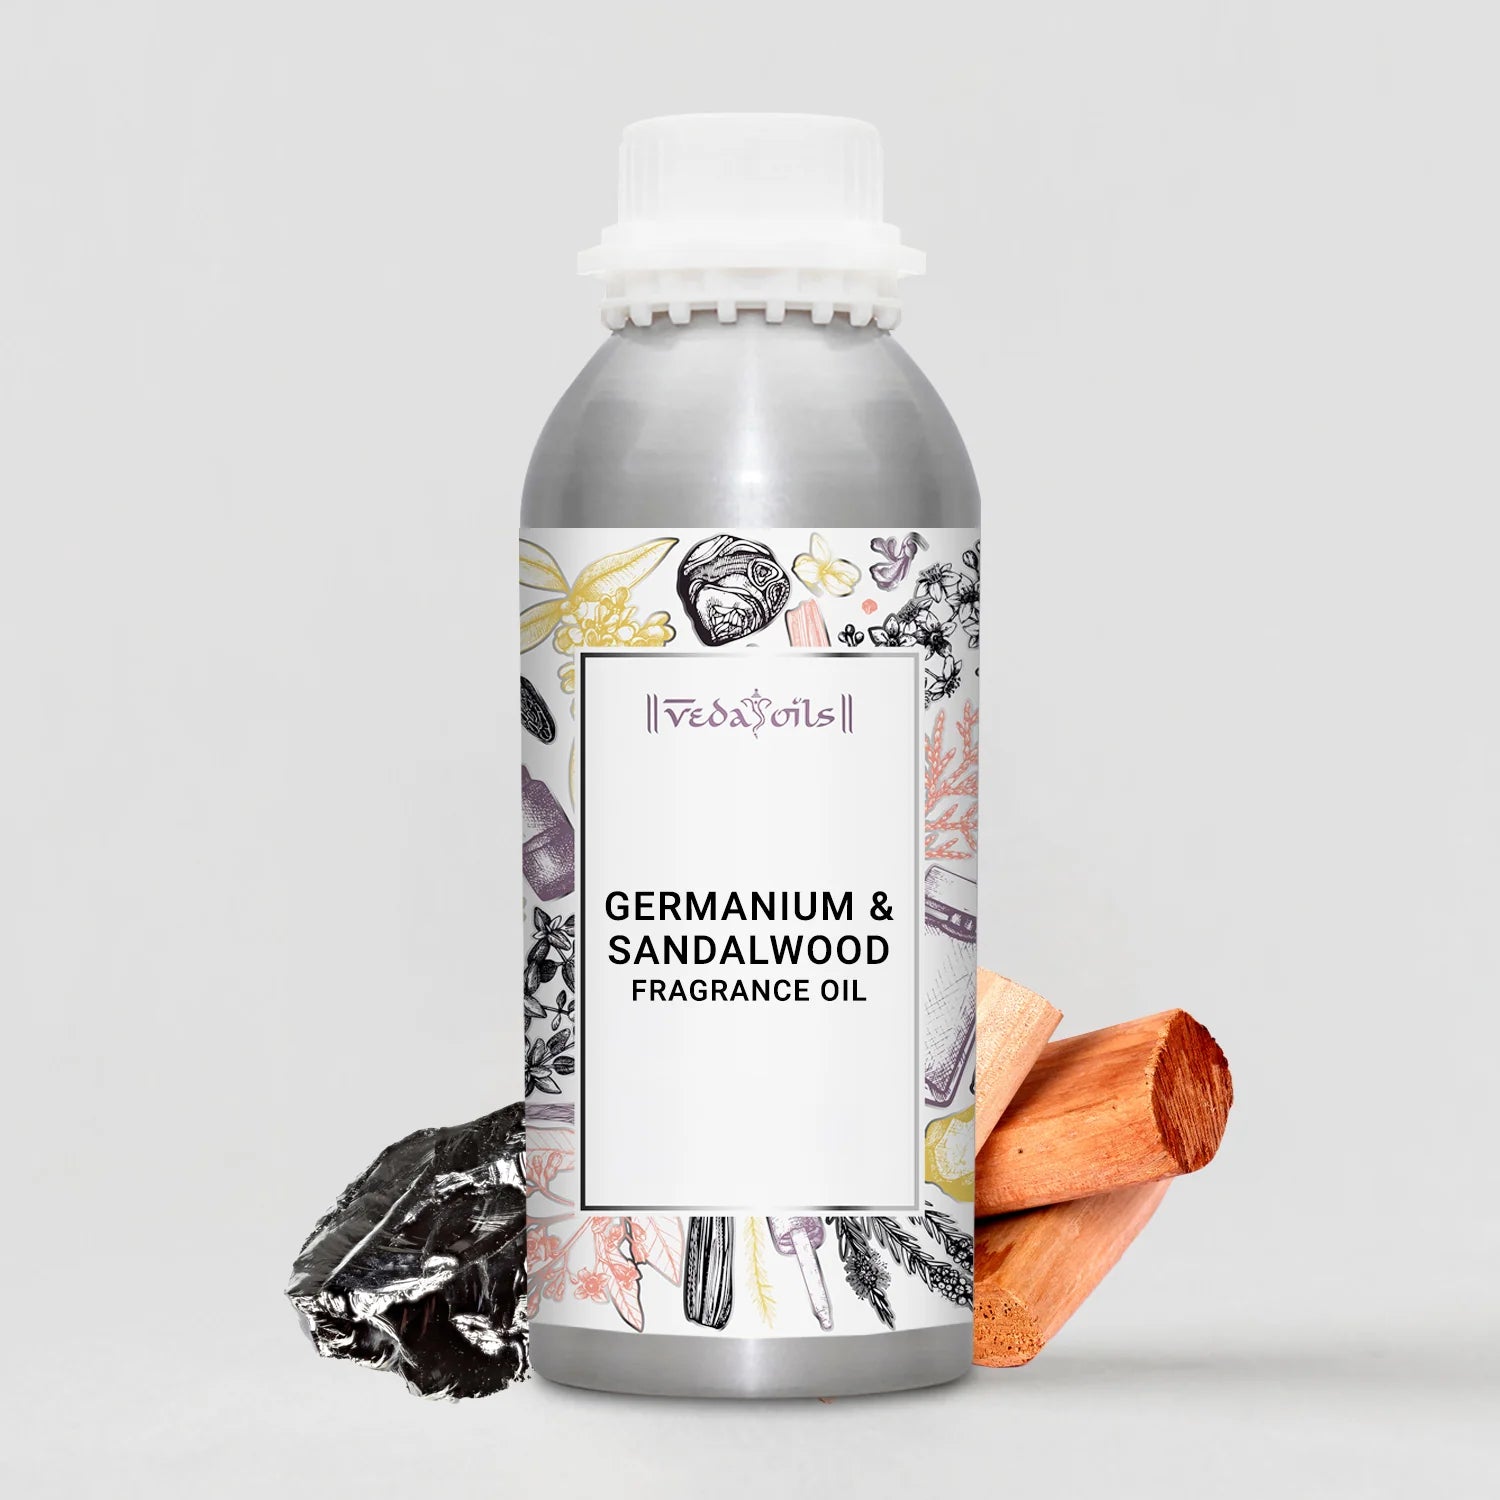 Germanium & Sandalwood Fragrance Oil